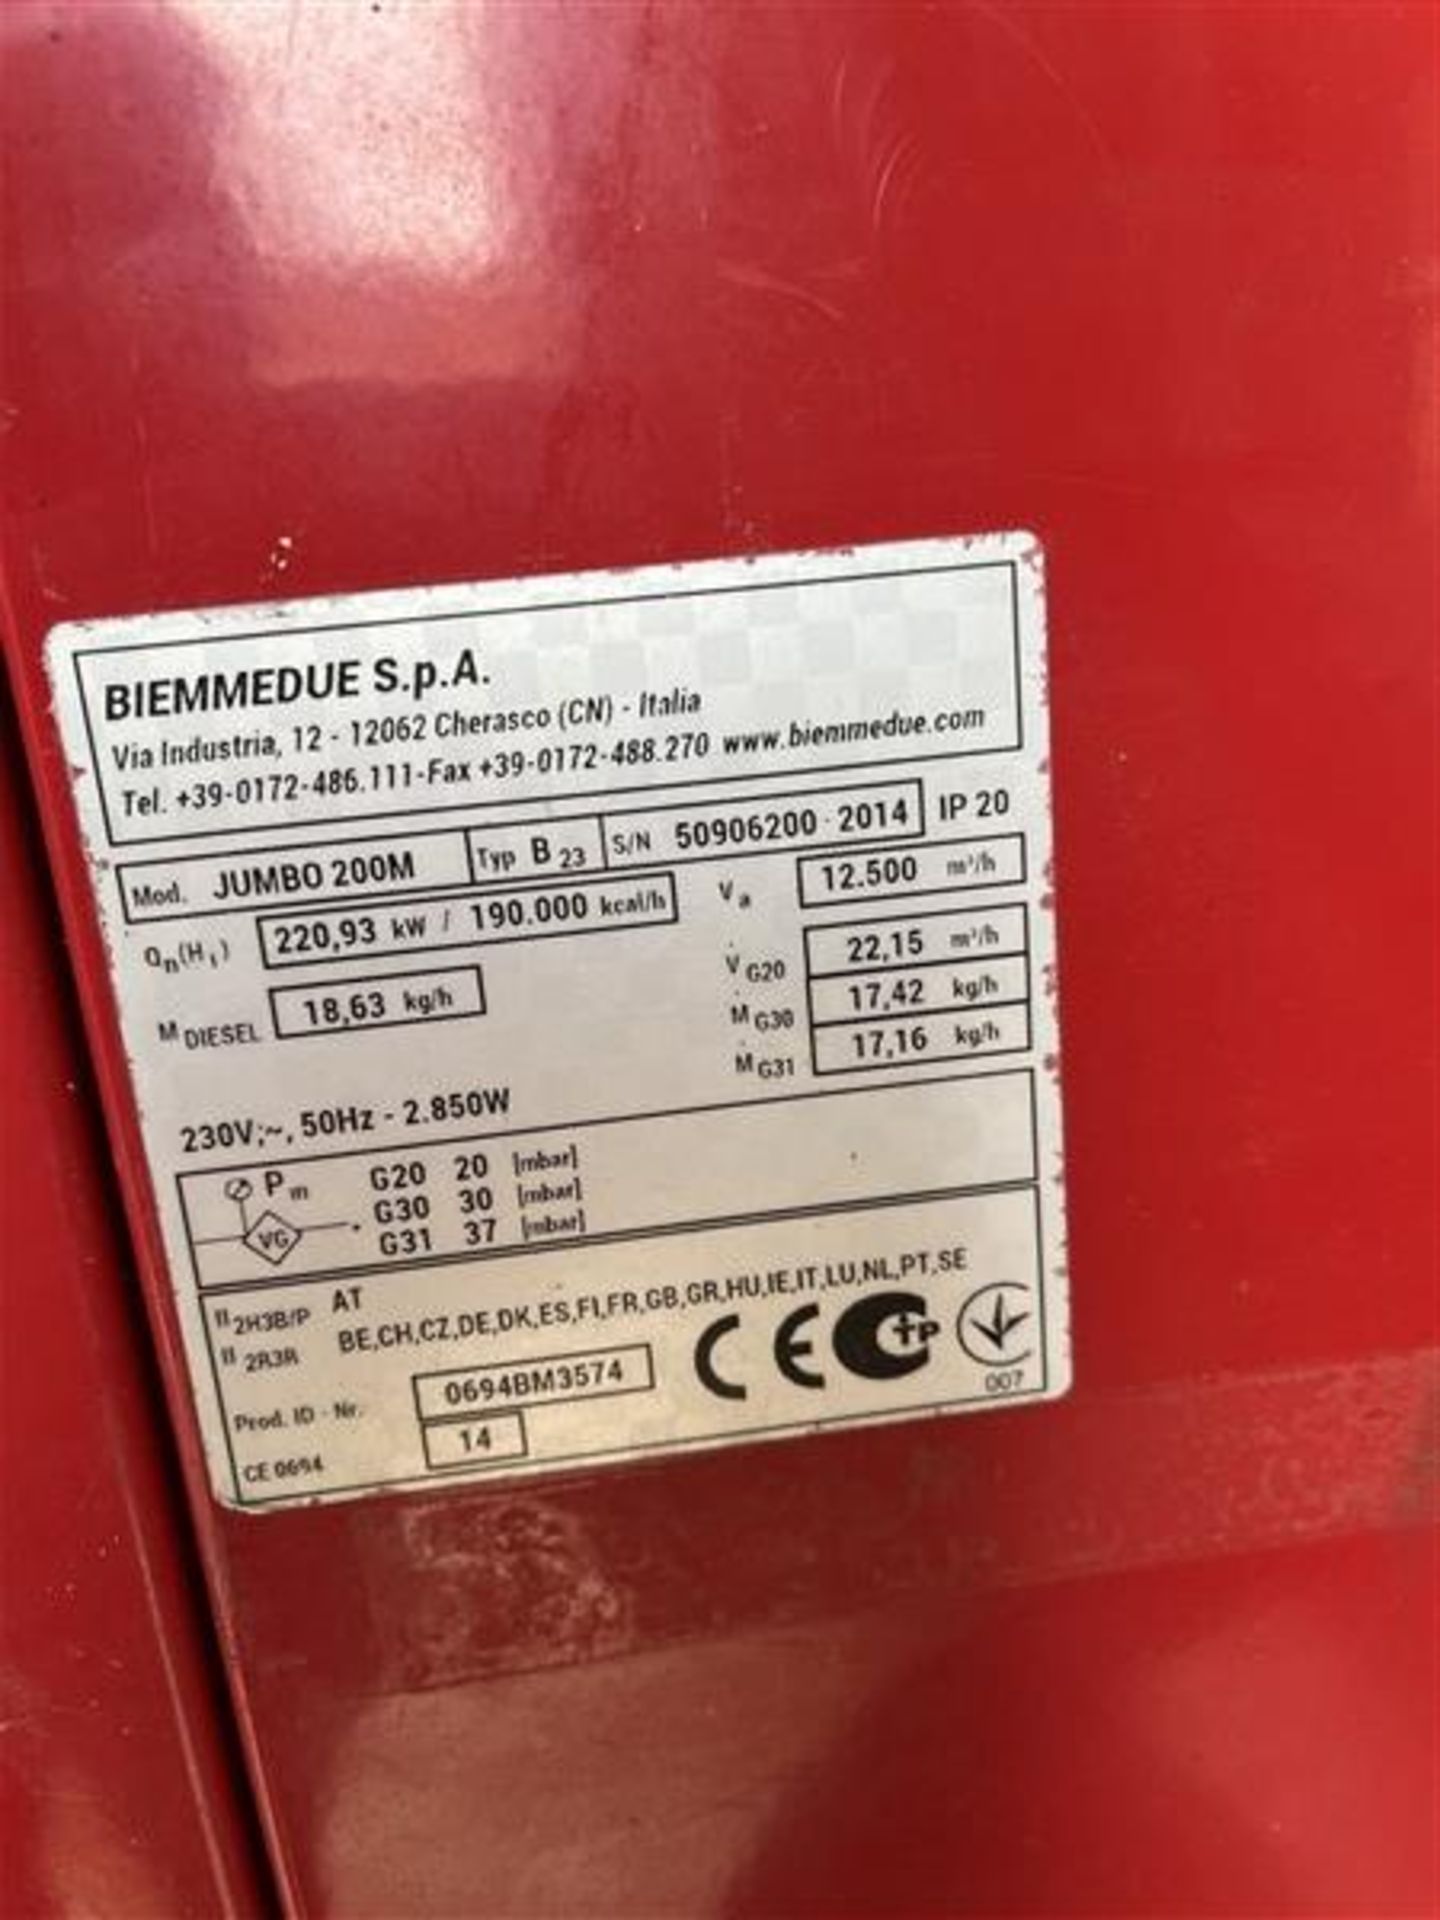 Biemmedue SPA Jumbo 200m Mobile Heater (2014) - Bild 3 aus 6